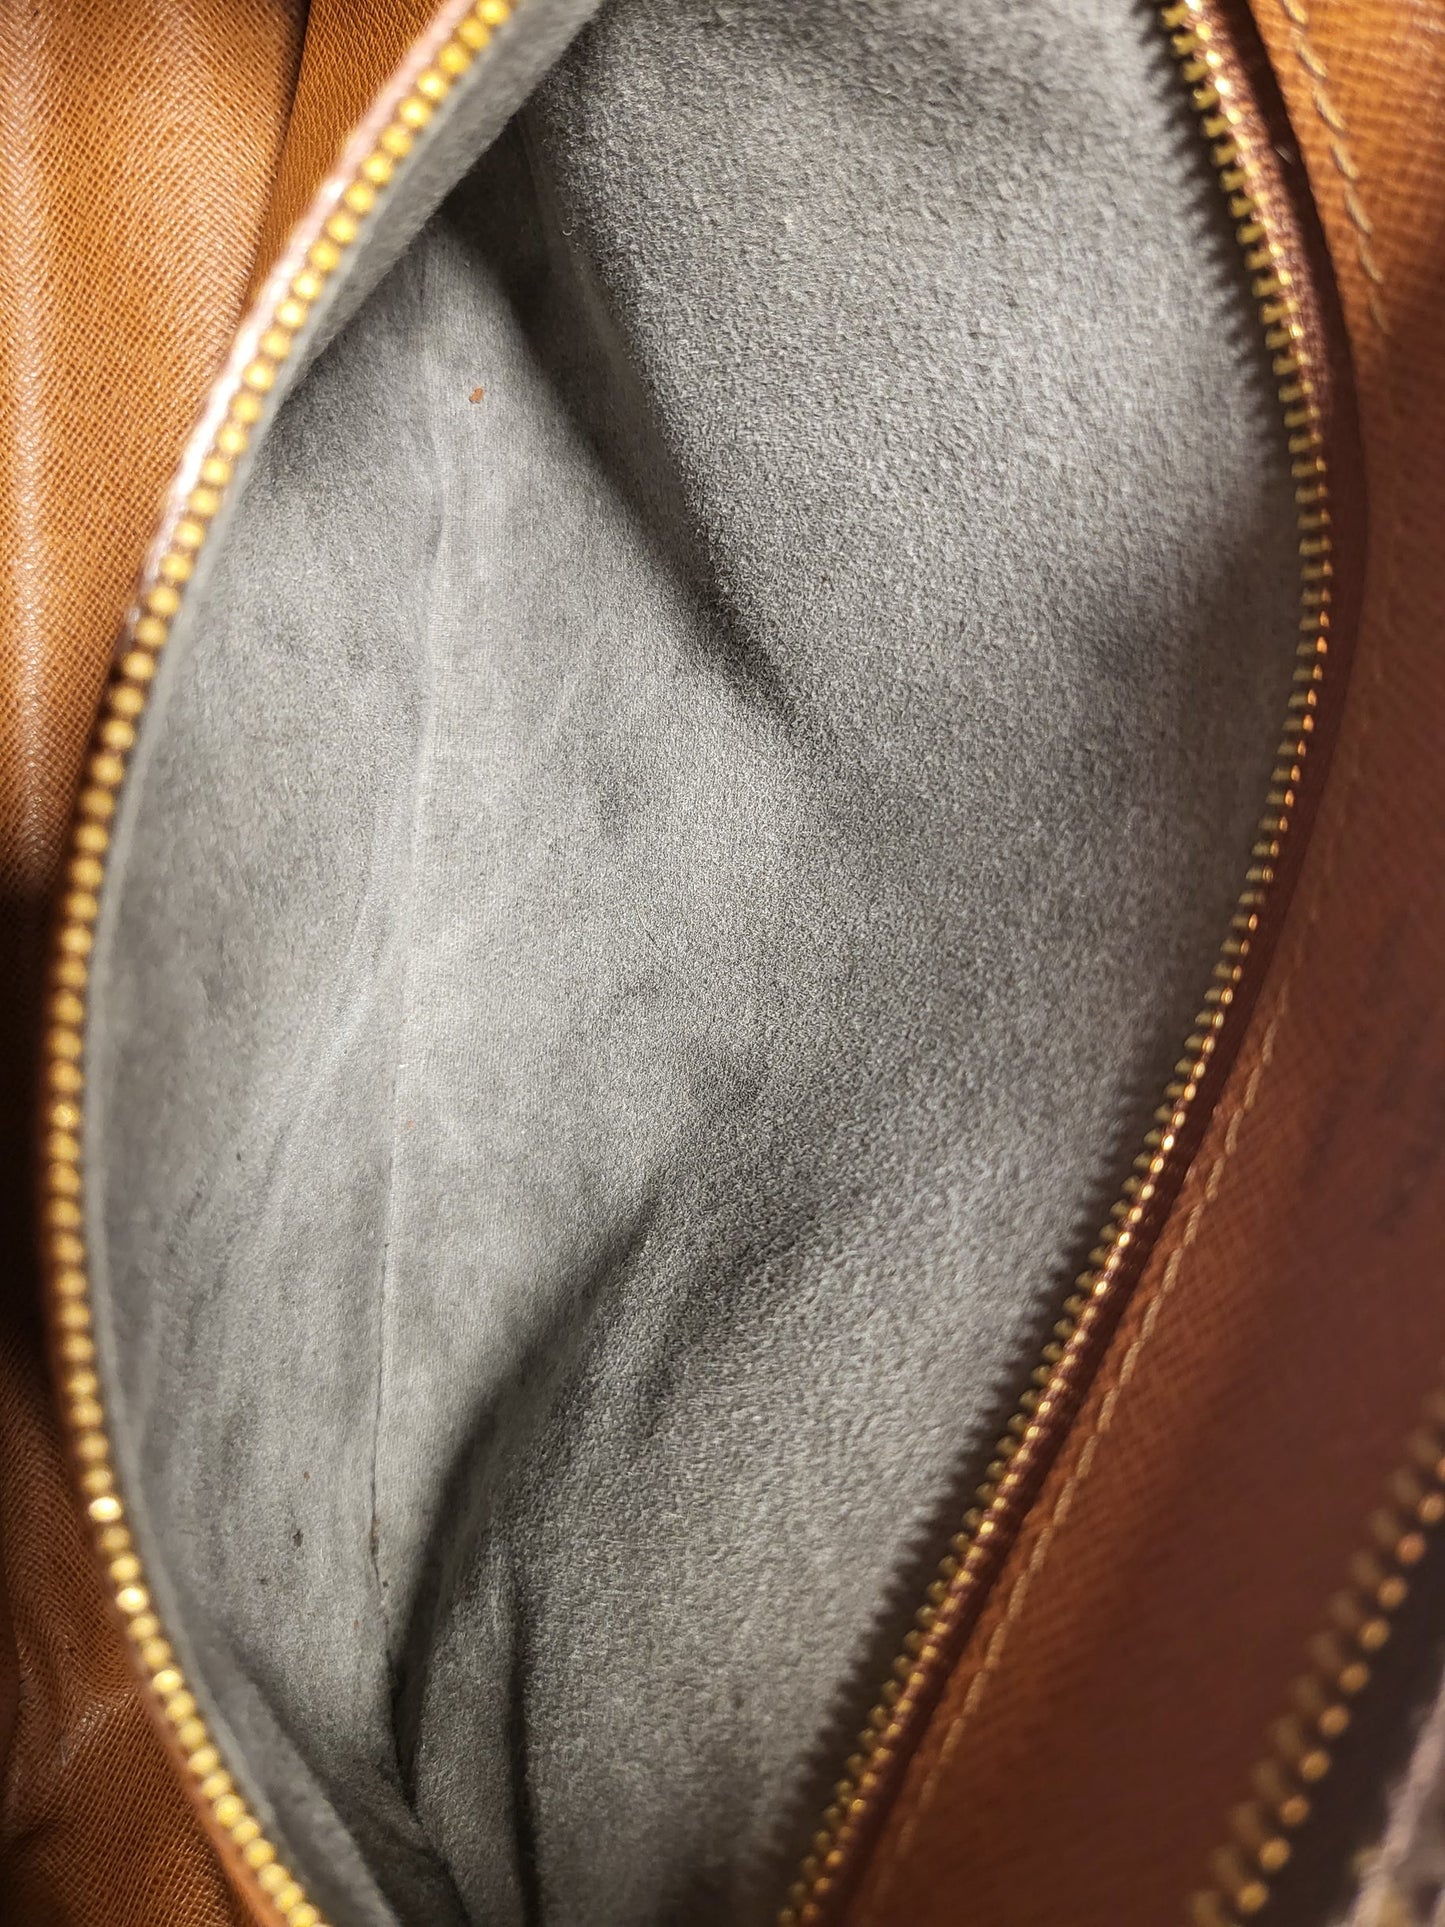 Authentic pre-owned Louis Vuitton Nile pm crossbody shoulder bag